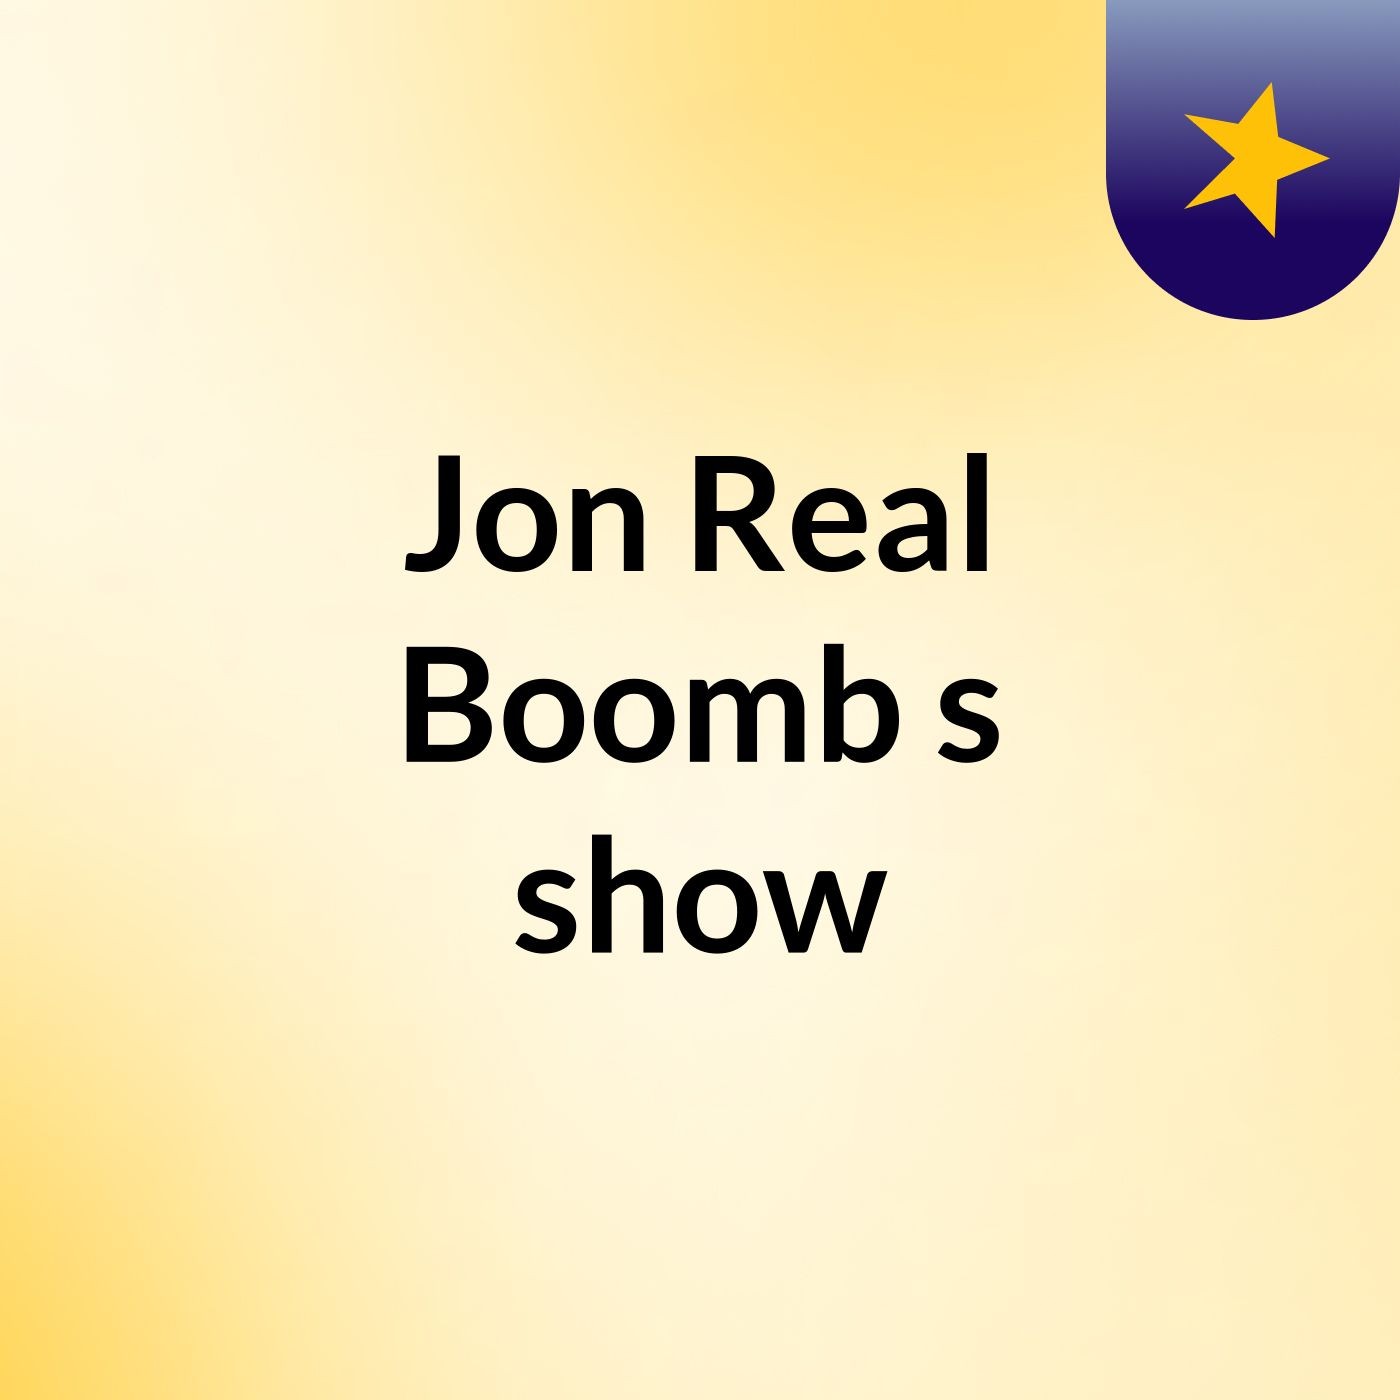 Jon Real Boomb's show